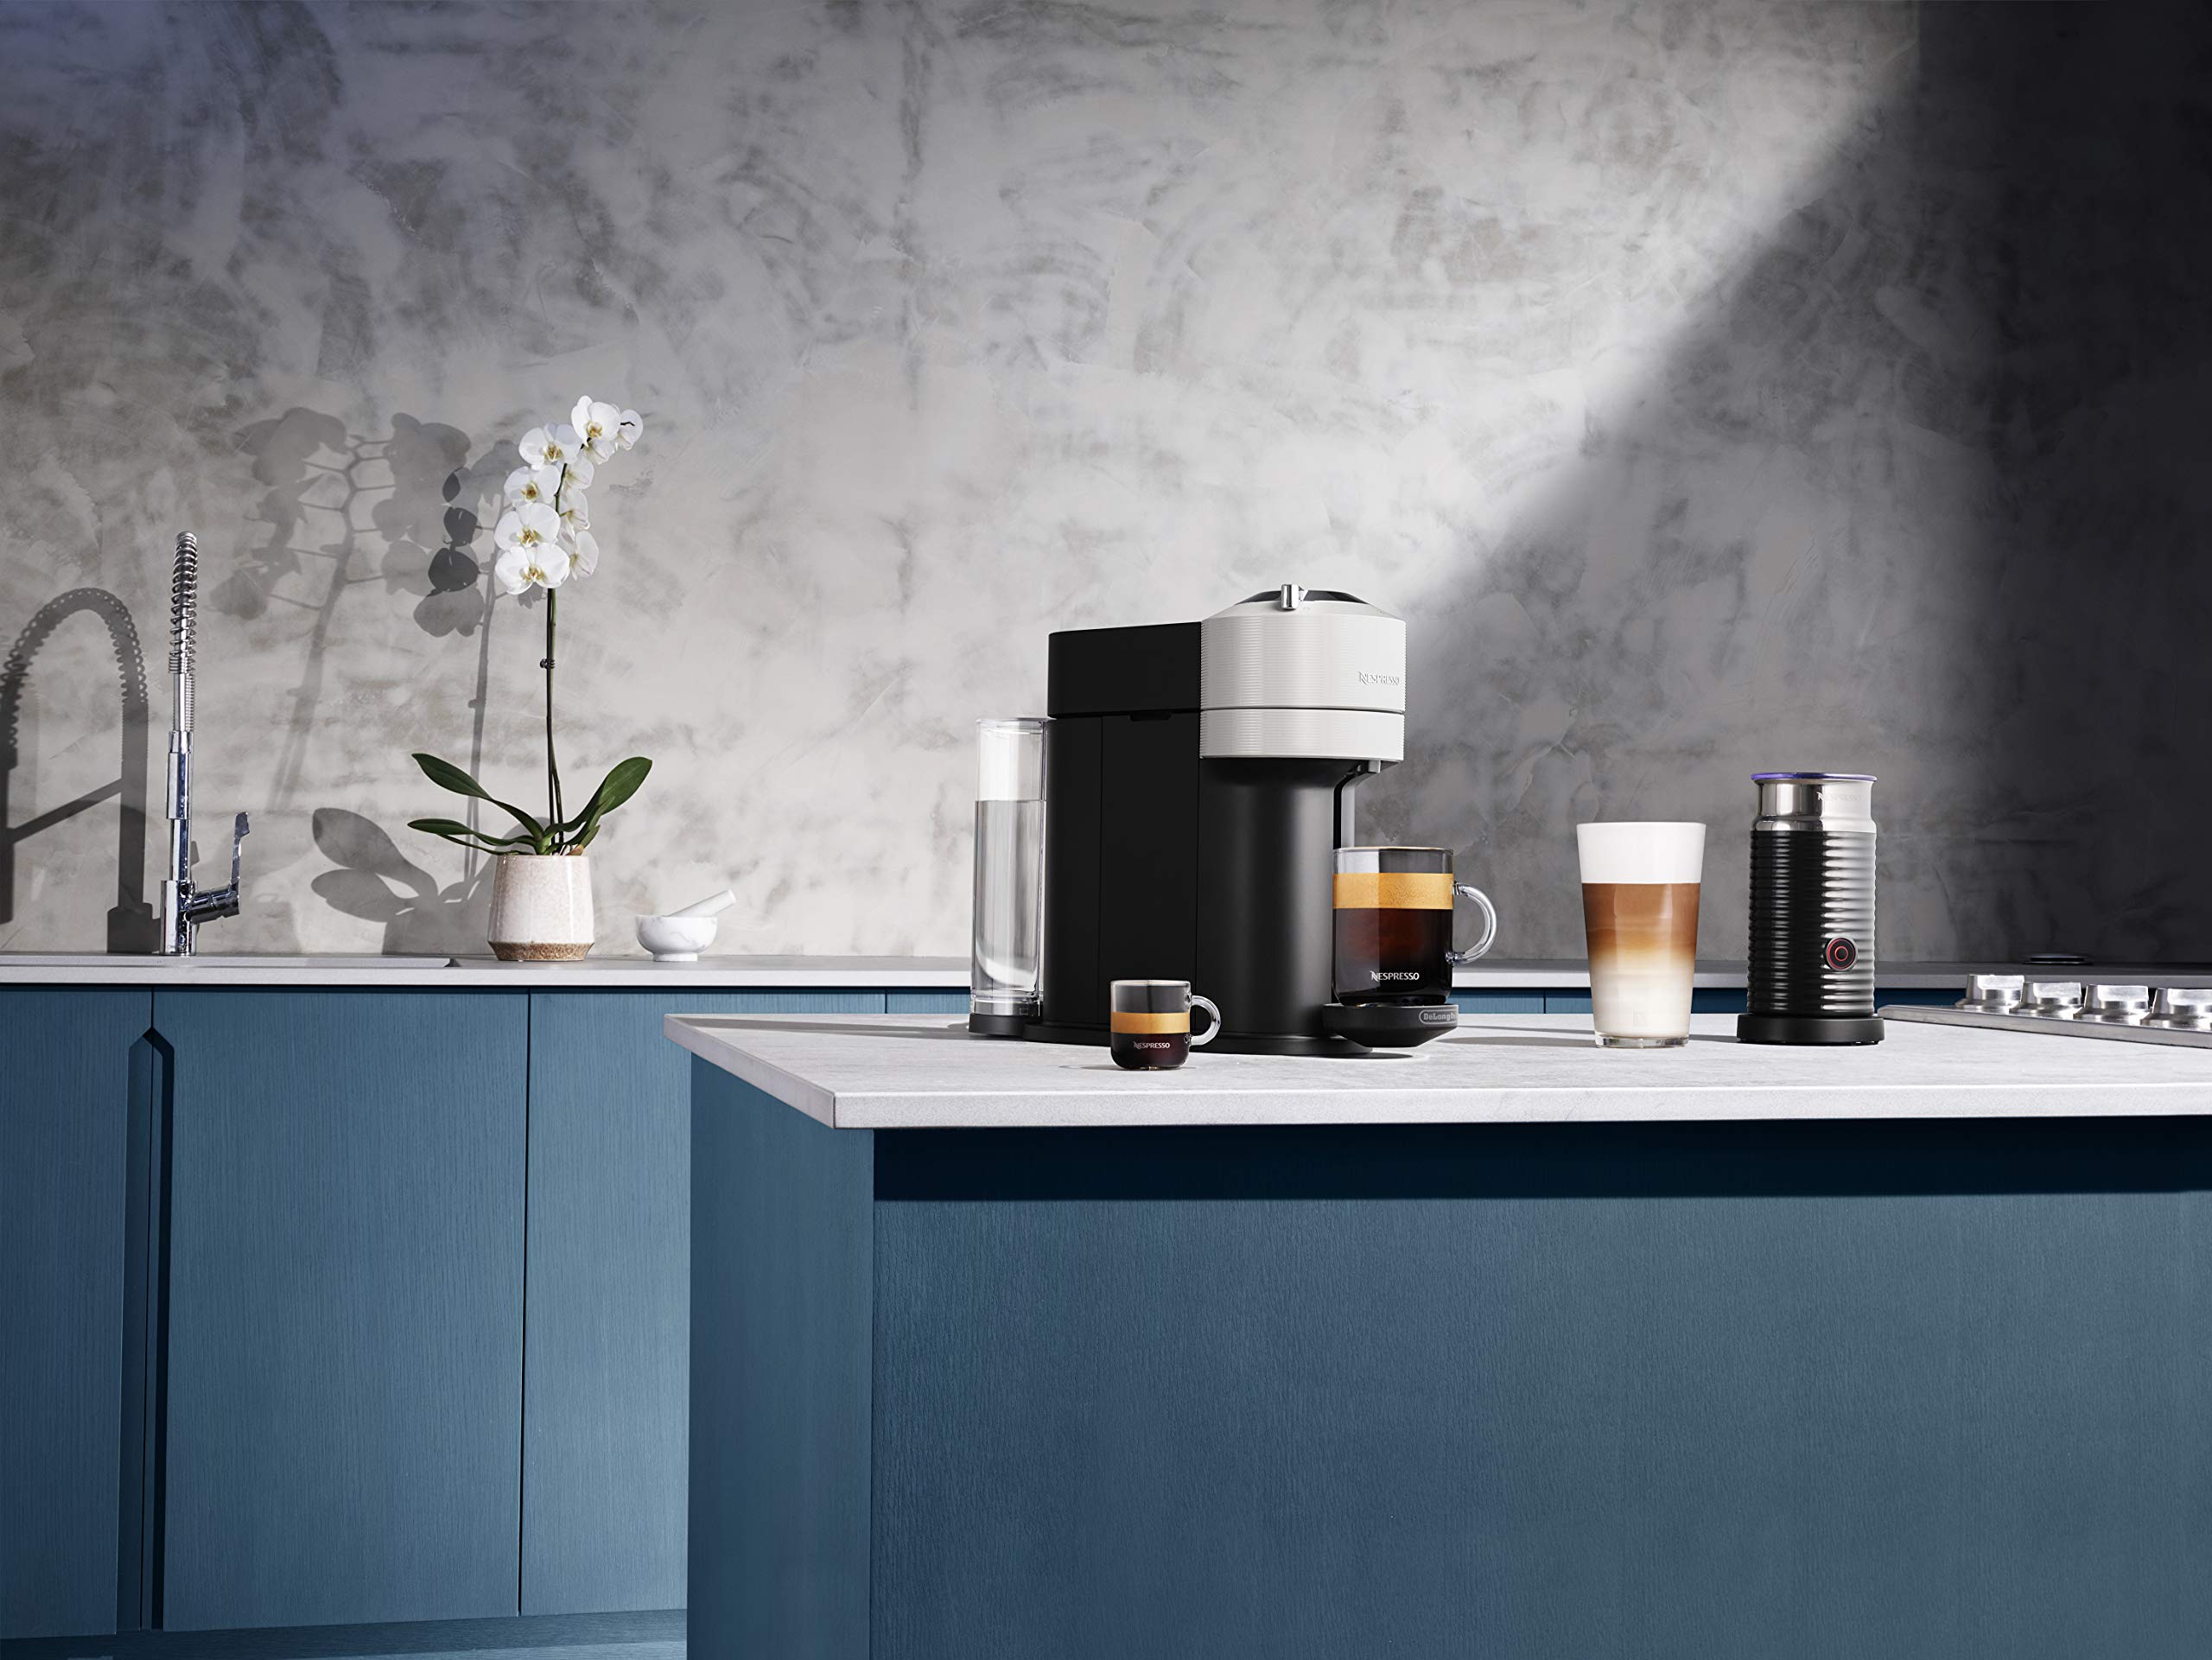 Nespresso Vertuo Next Coffee and Espresso Maker by De'Longhi  - Acceptable